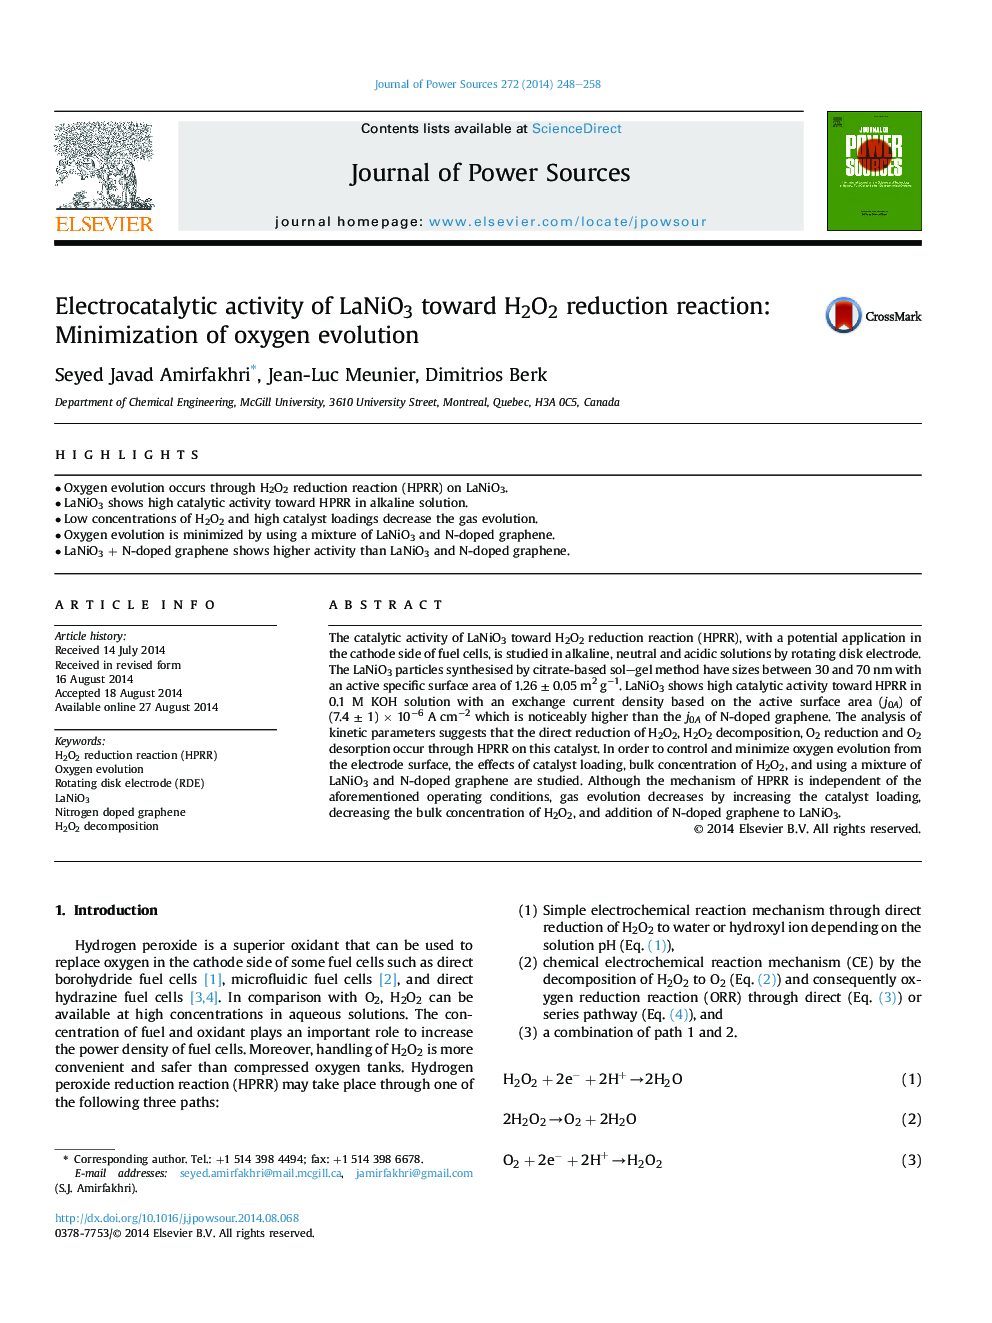 Electrocatalytic activity of LaNiO3 toward H2O2 reduction reaction: Minimization of oxygen evolution